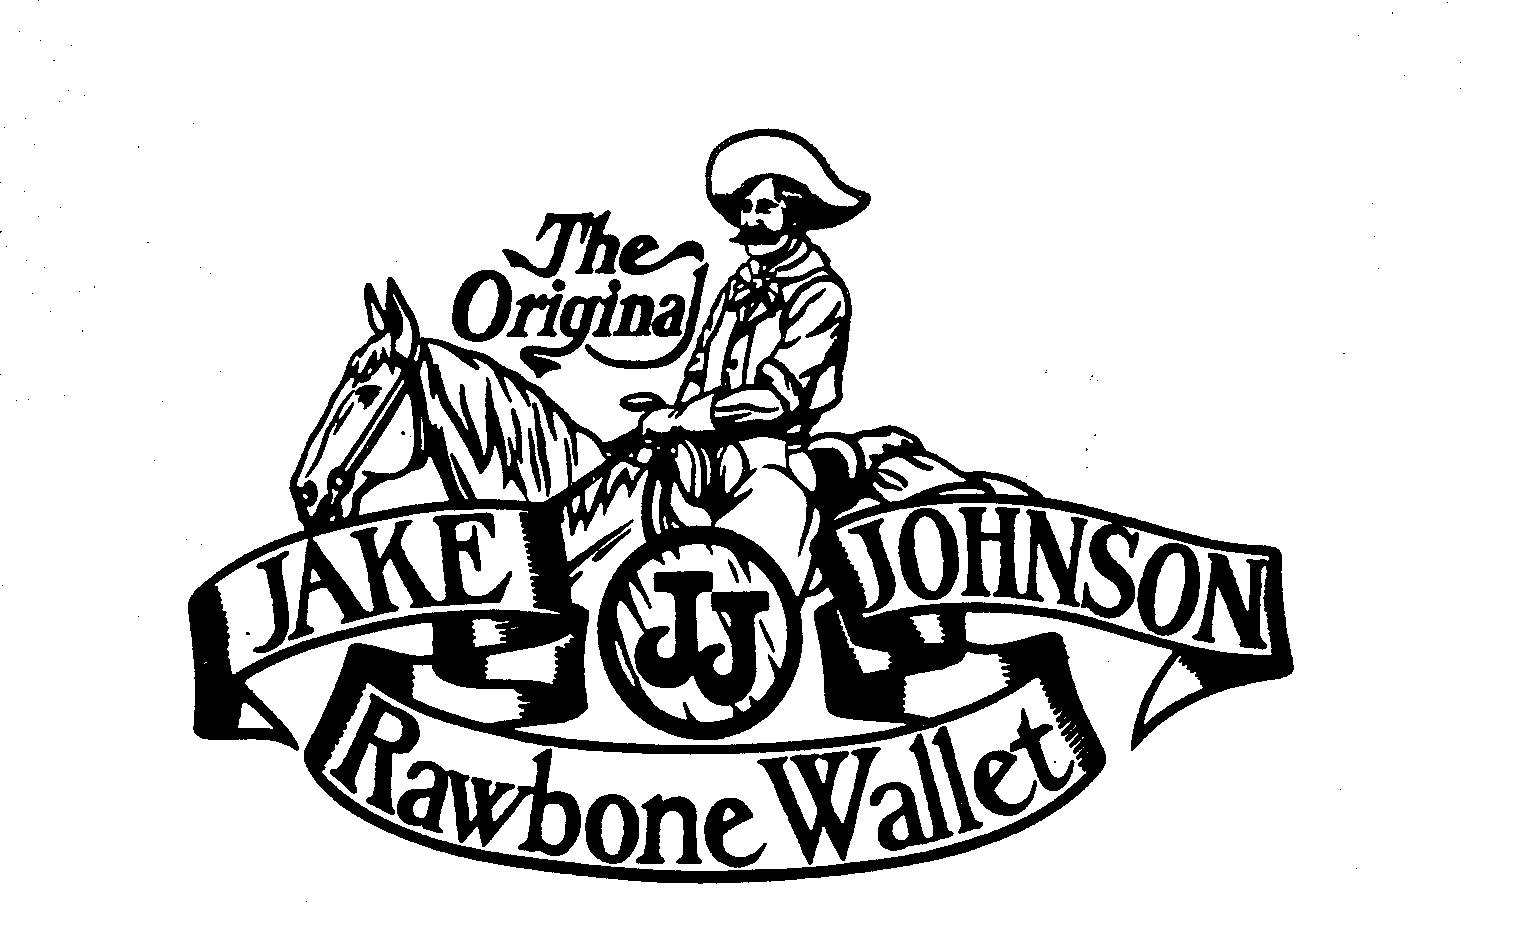  JAKE JOHNSON RAWBONE WALLET